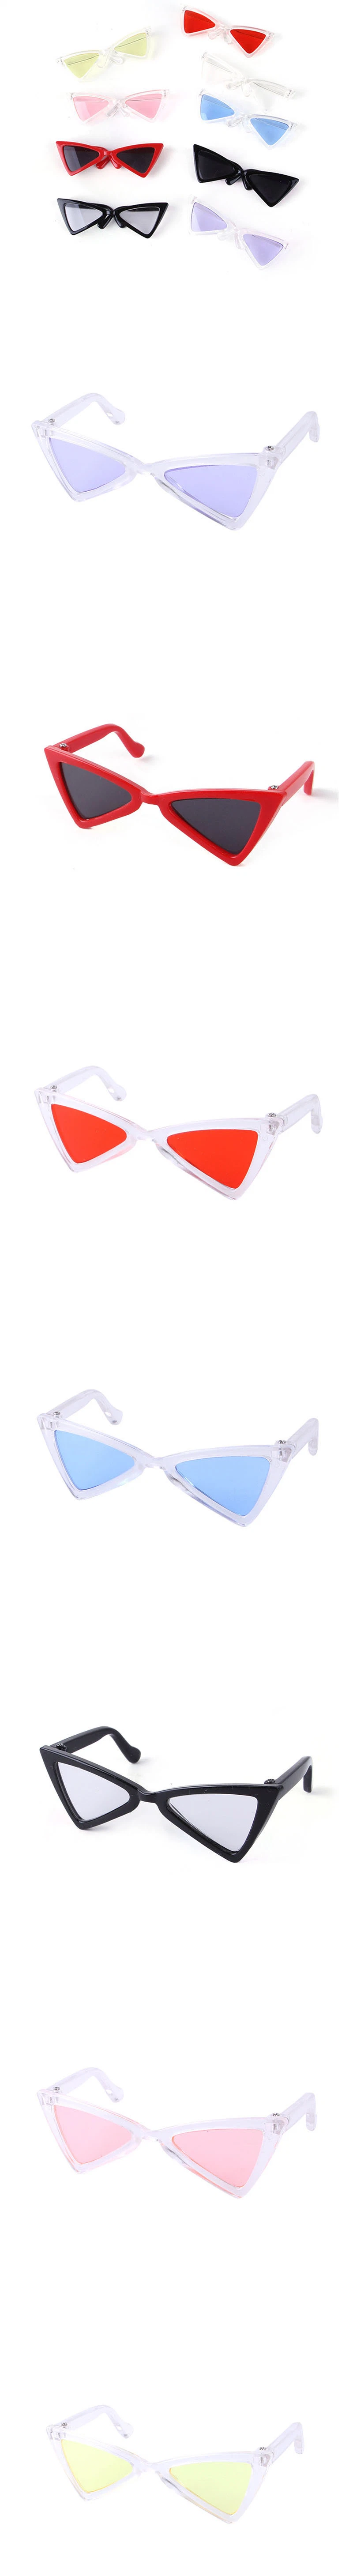 Spot Pet Glasses Cat Dog Sunglasses Teddy Personality Funny Head Wear Pet Accessories